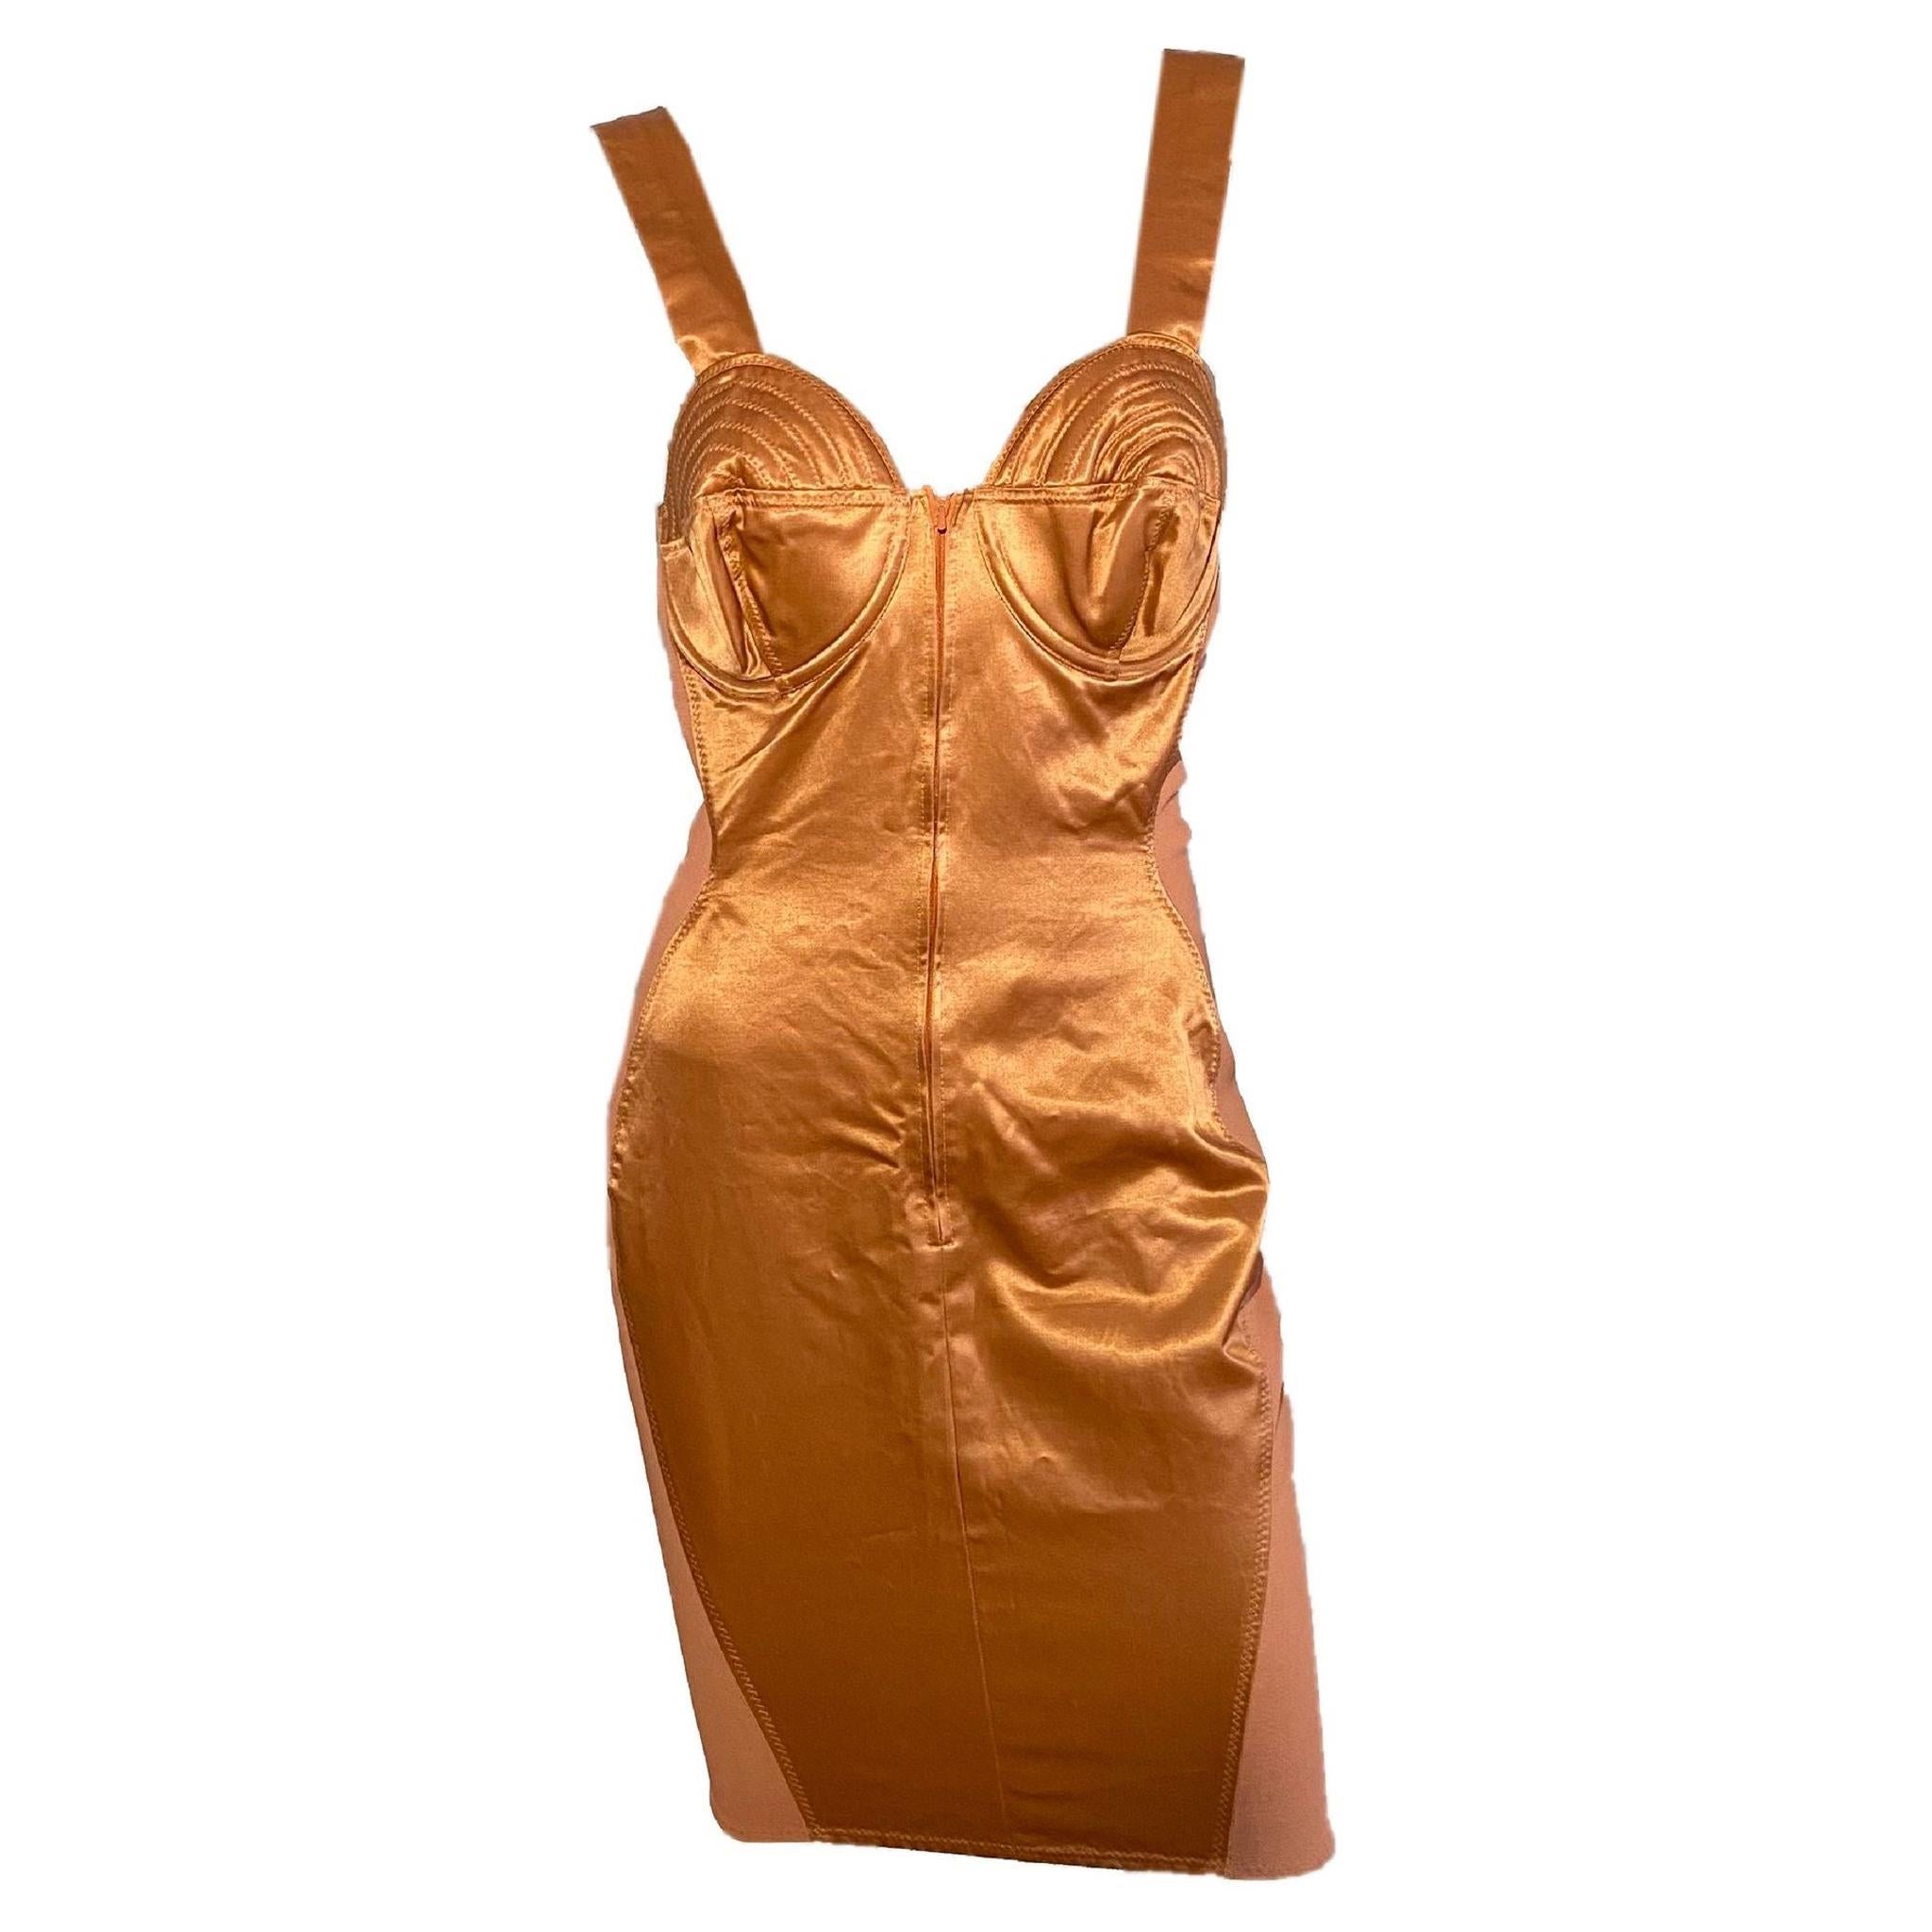 Jean Paul Gaultier 1989 Iconic “Cone Bust” Corset Dress